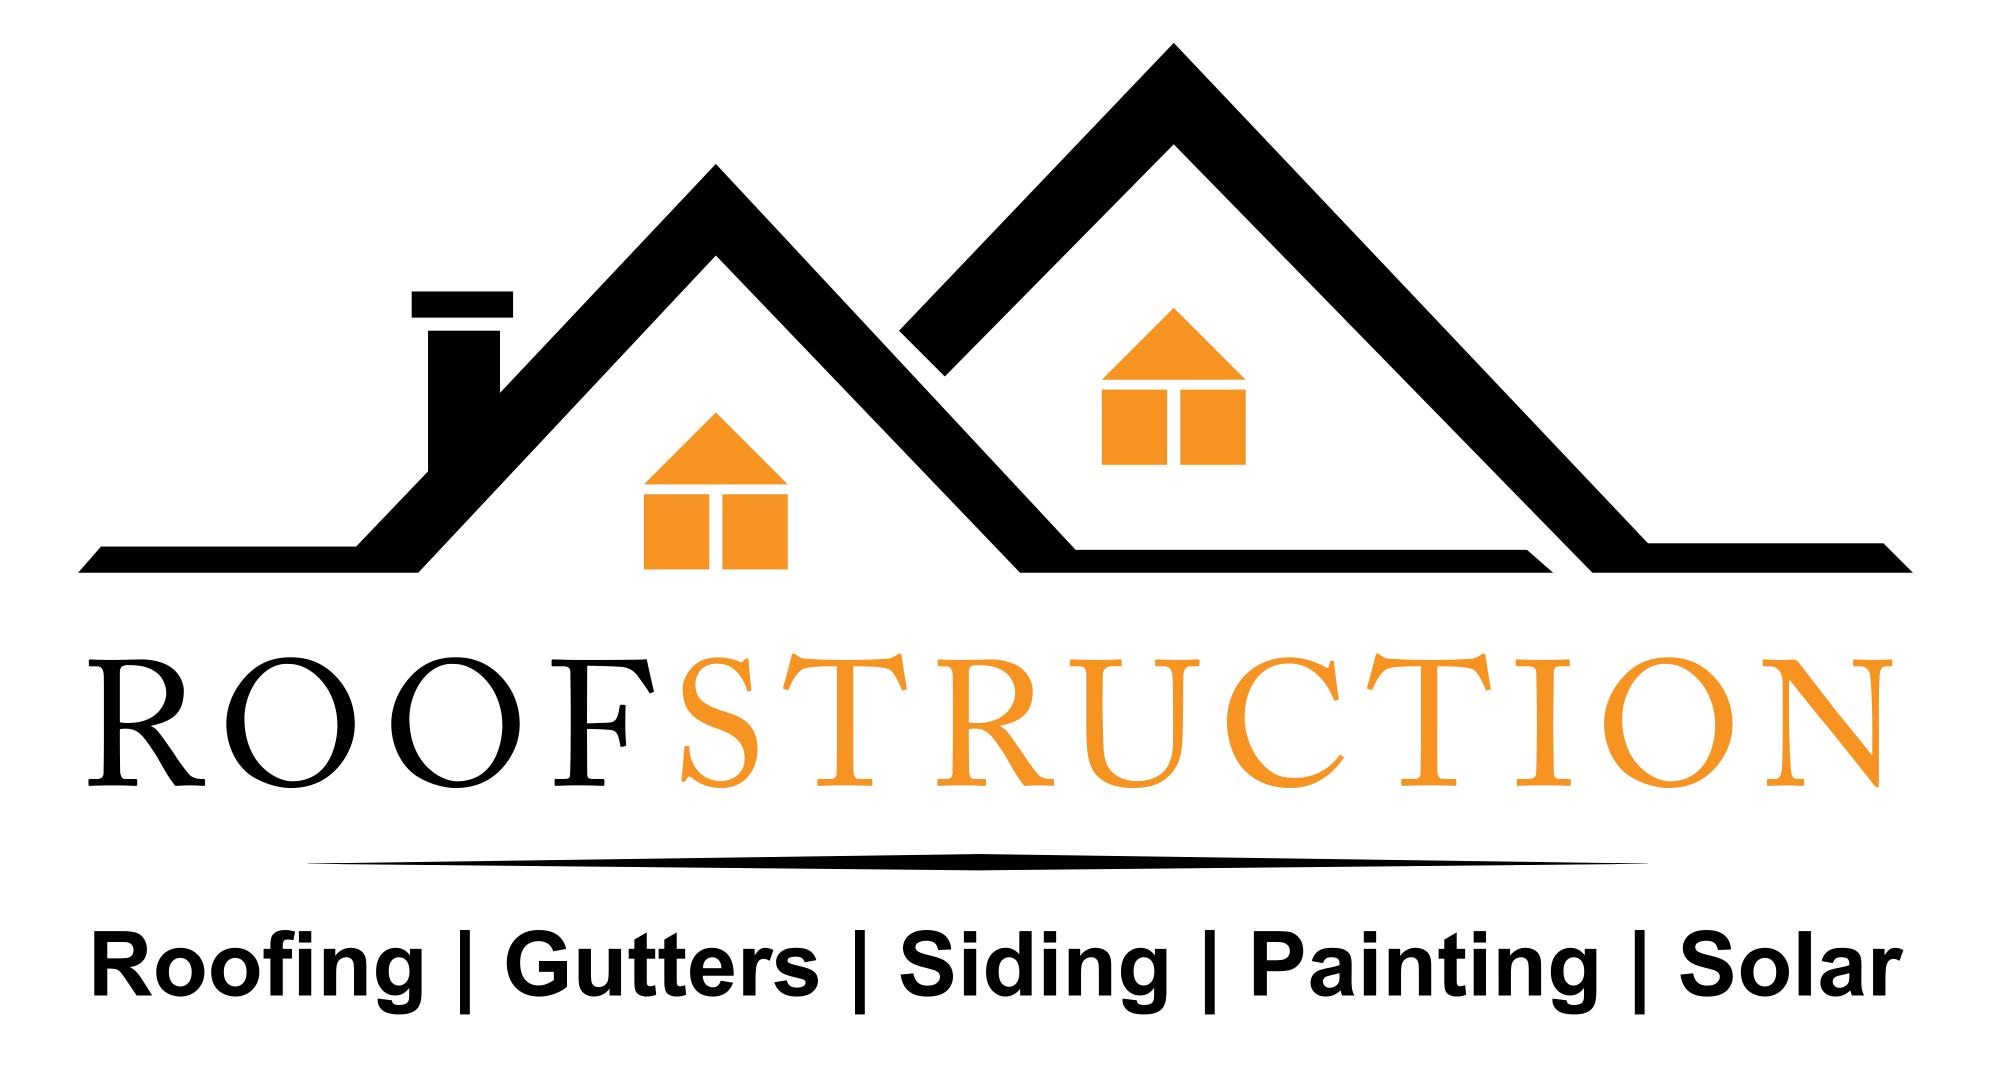 Roofstruction Logo